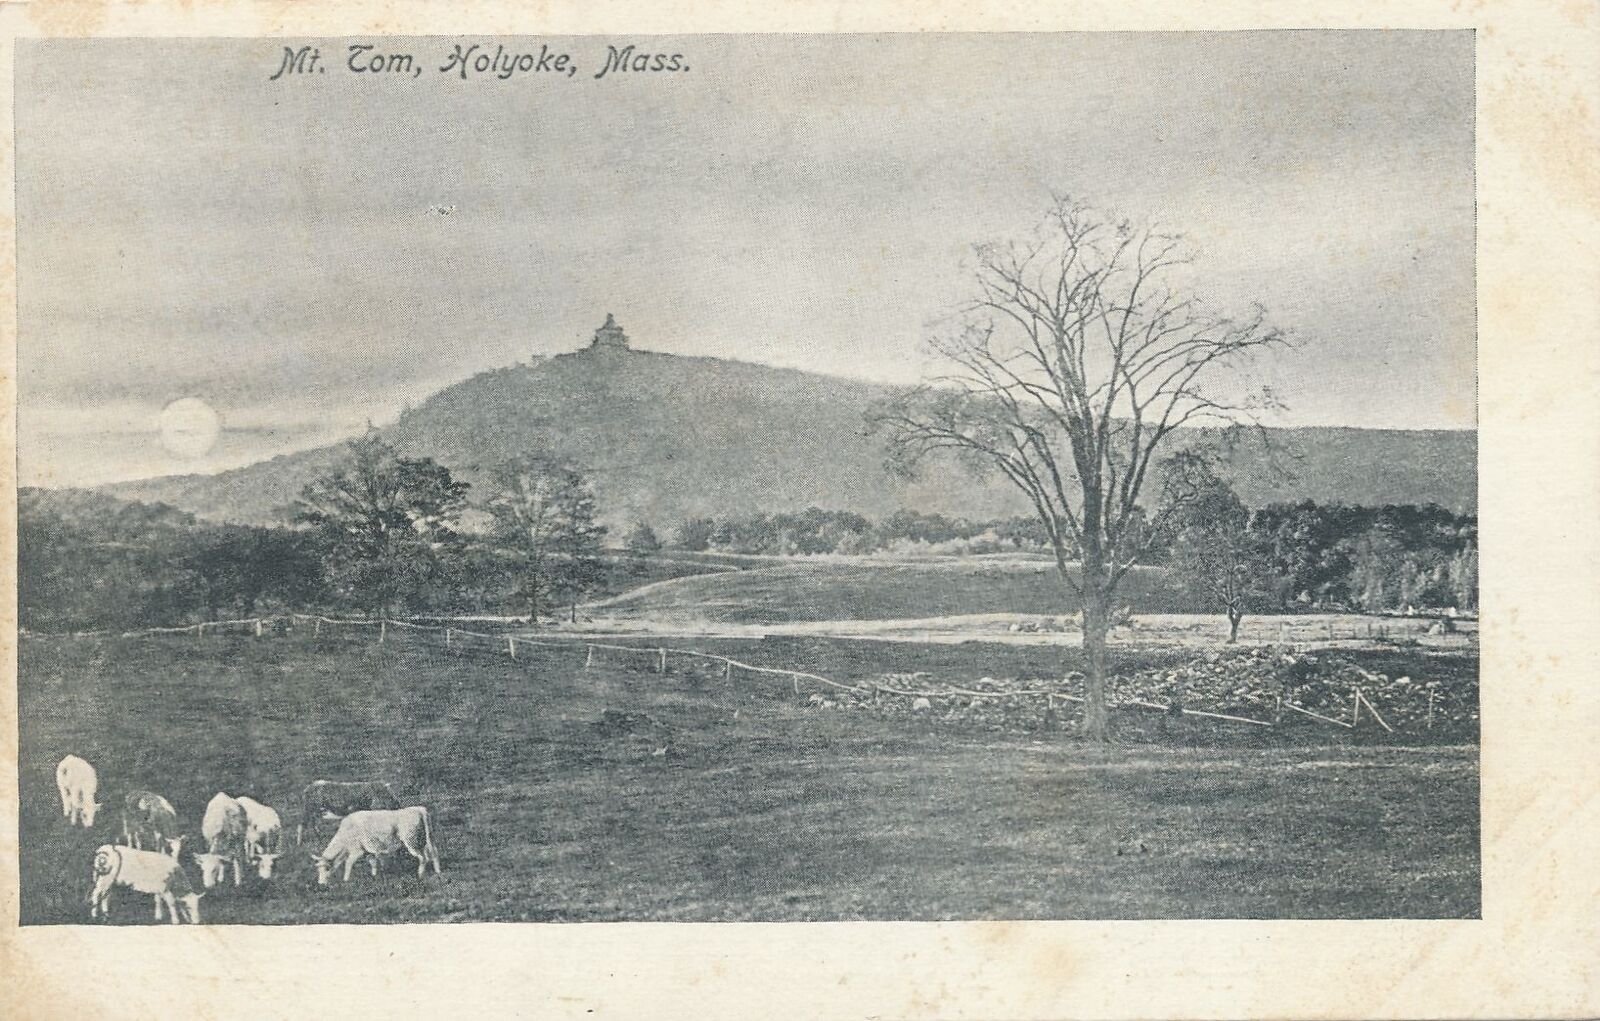 HOLYOKE MA - Mt. Tom showing Cows - udb (pre 1908)